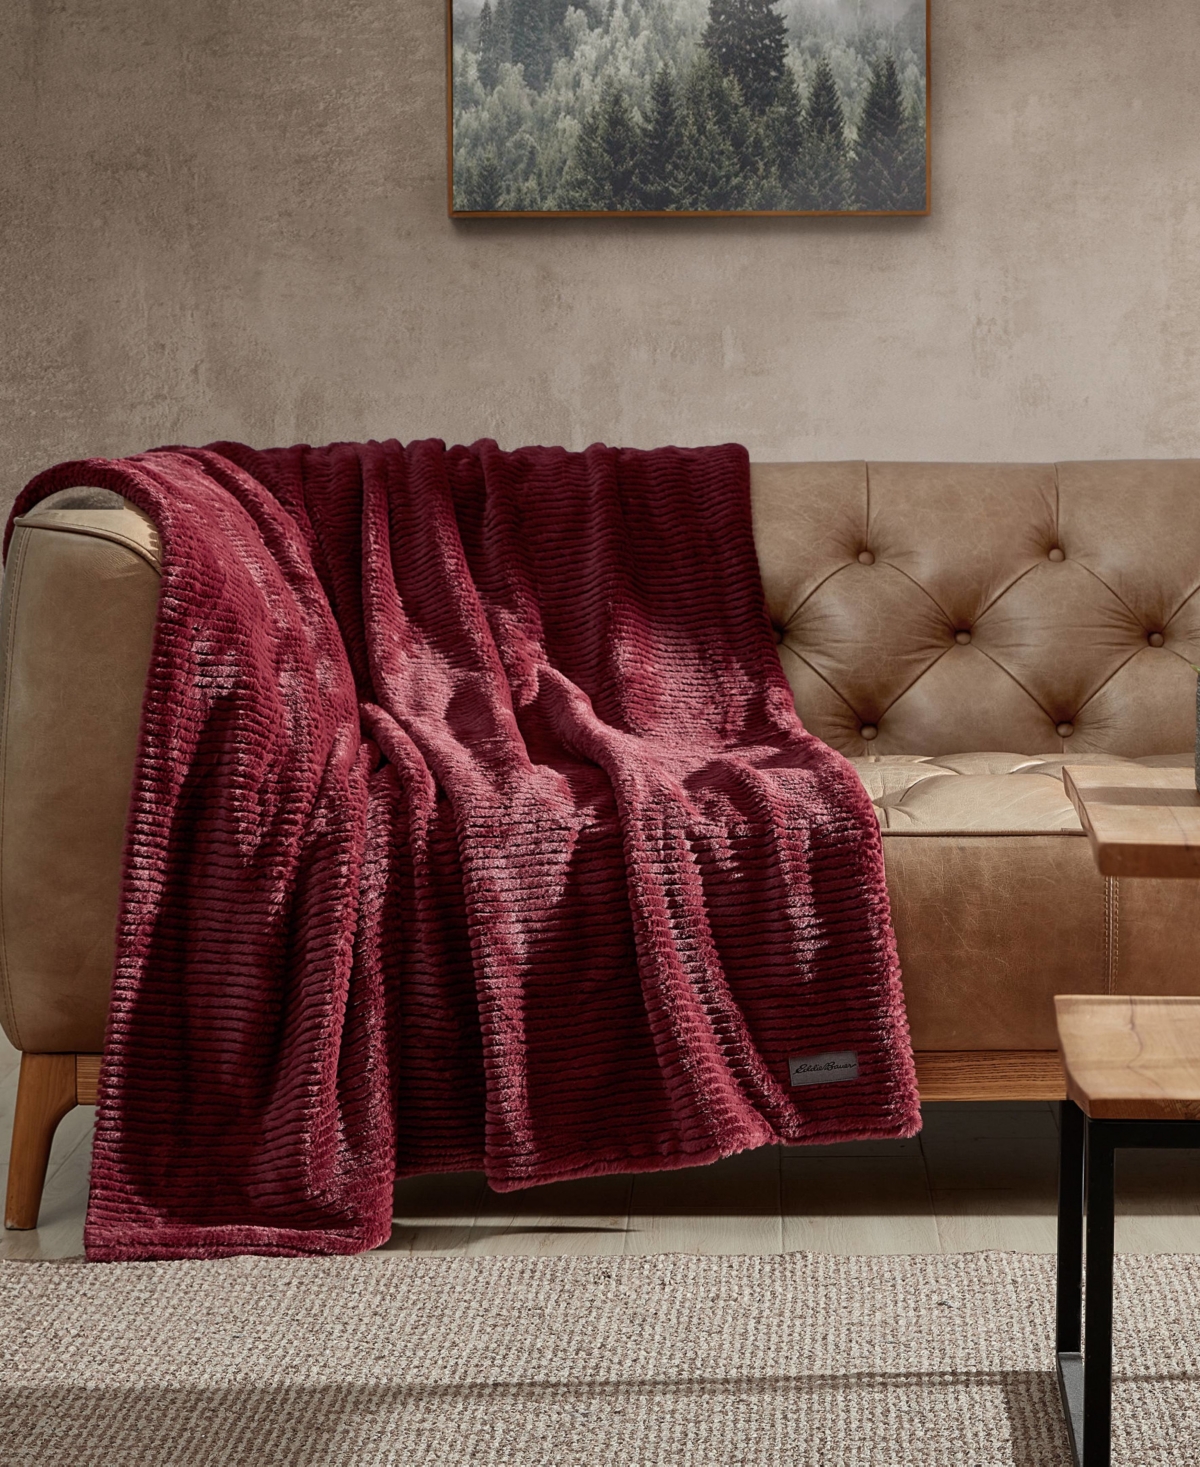 Eddie Bauer Solid Ribbed Super Soft Textured Throw Blanket Bedding In Burgundy Red